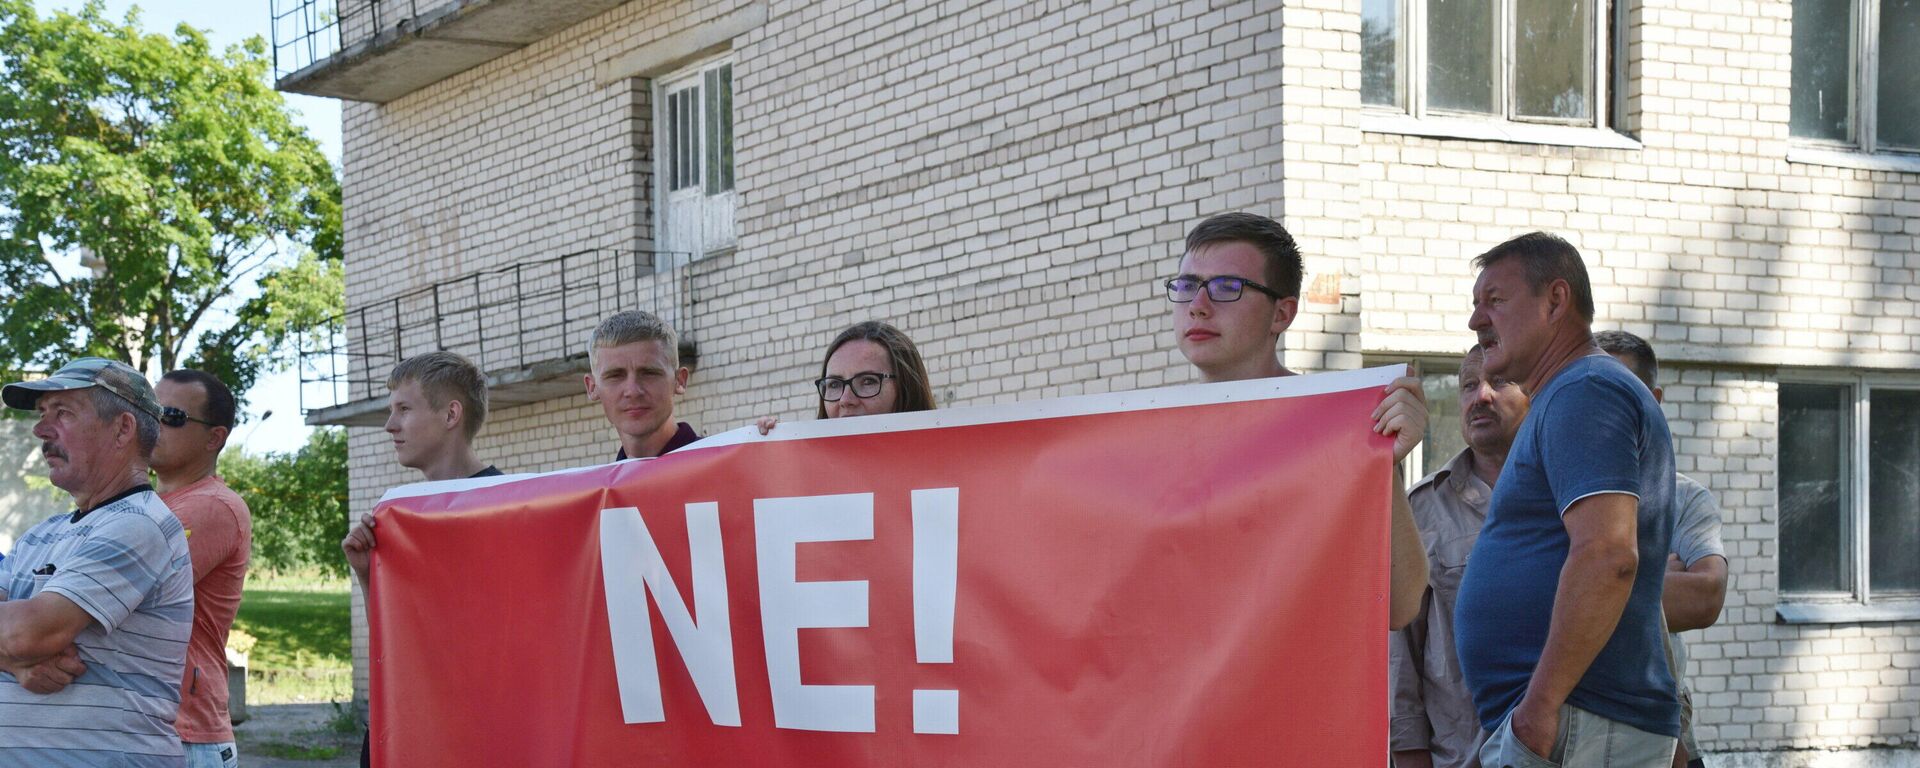 Акция протеста в Девенишкесе против строительства центра для мигрантов - Sputnik Литва, 1920, 23.07.2021